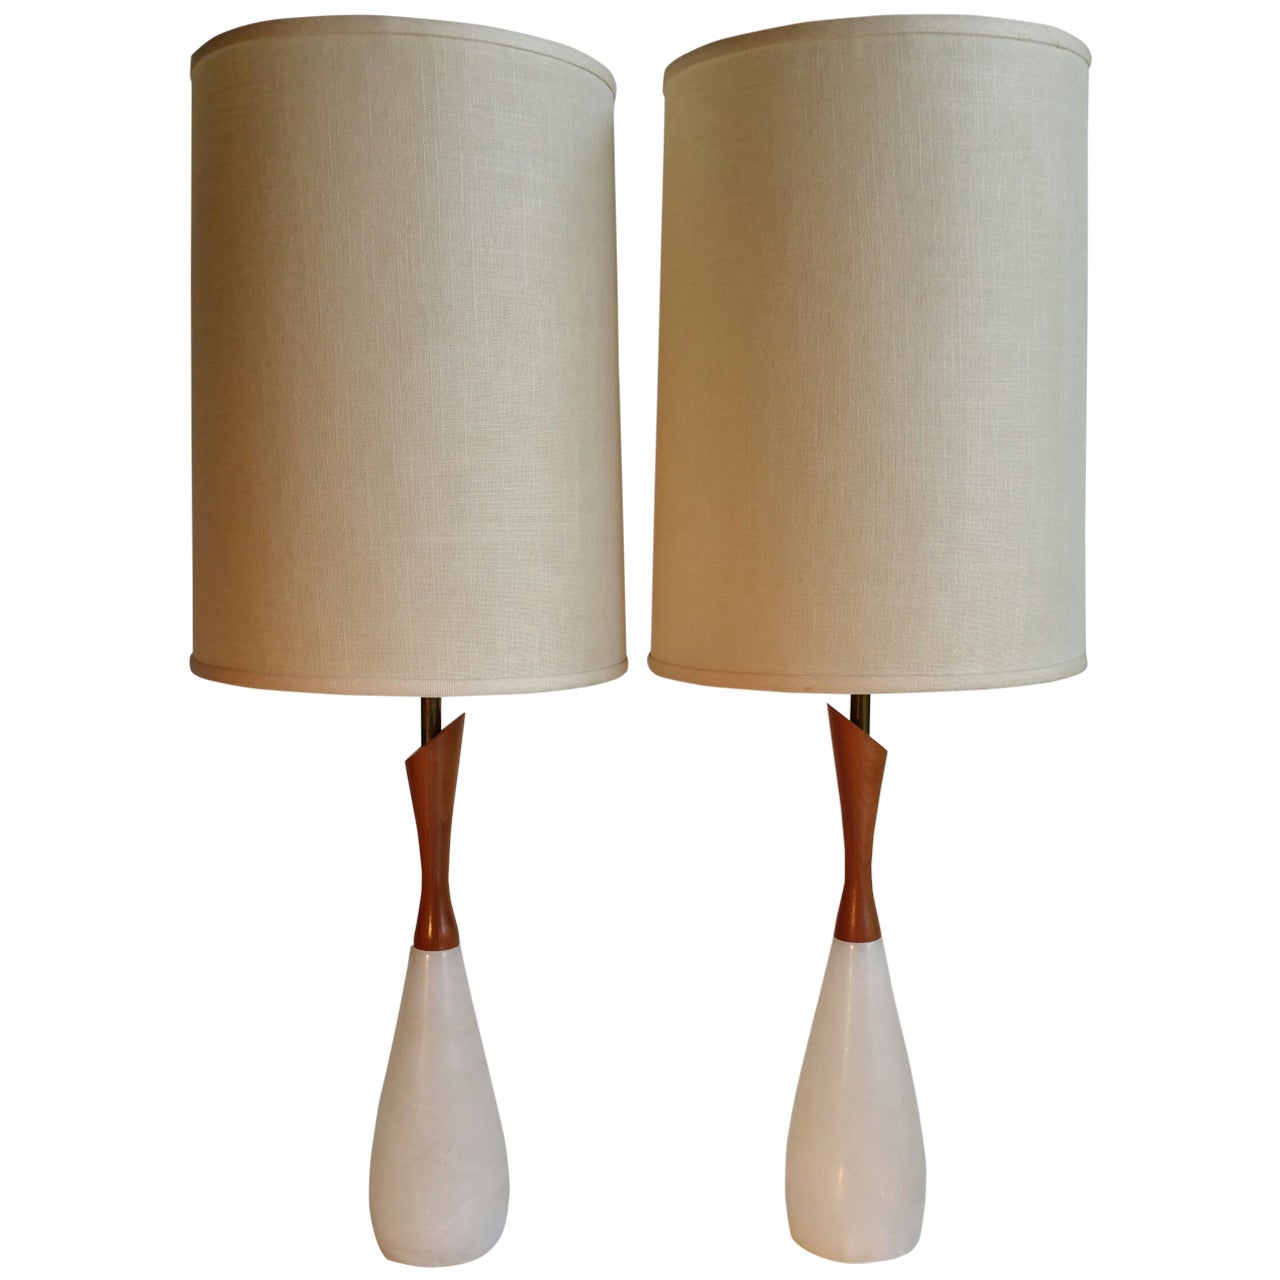 Pair of Quartz and Teak Mid-Century Modern Table Lamps